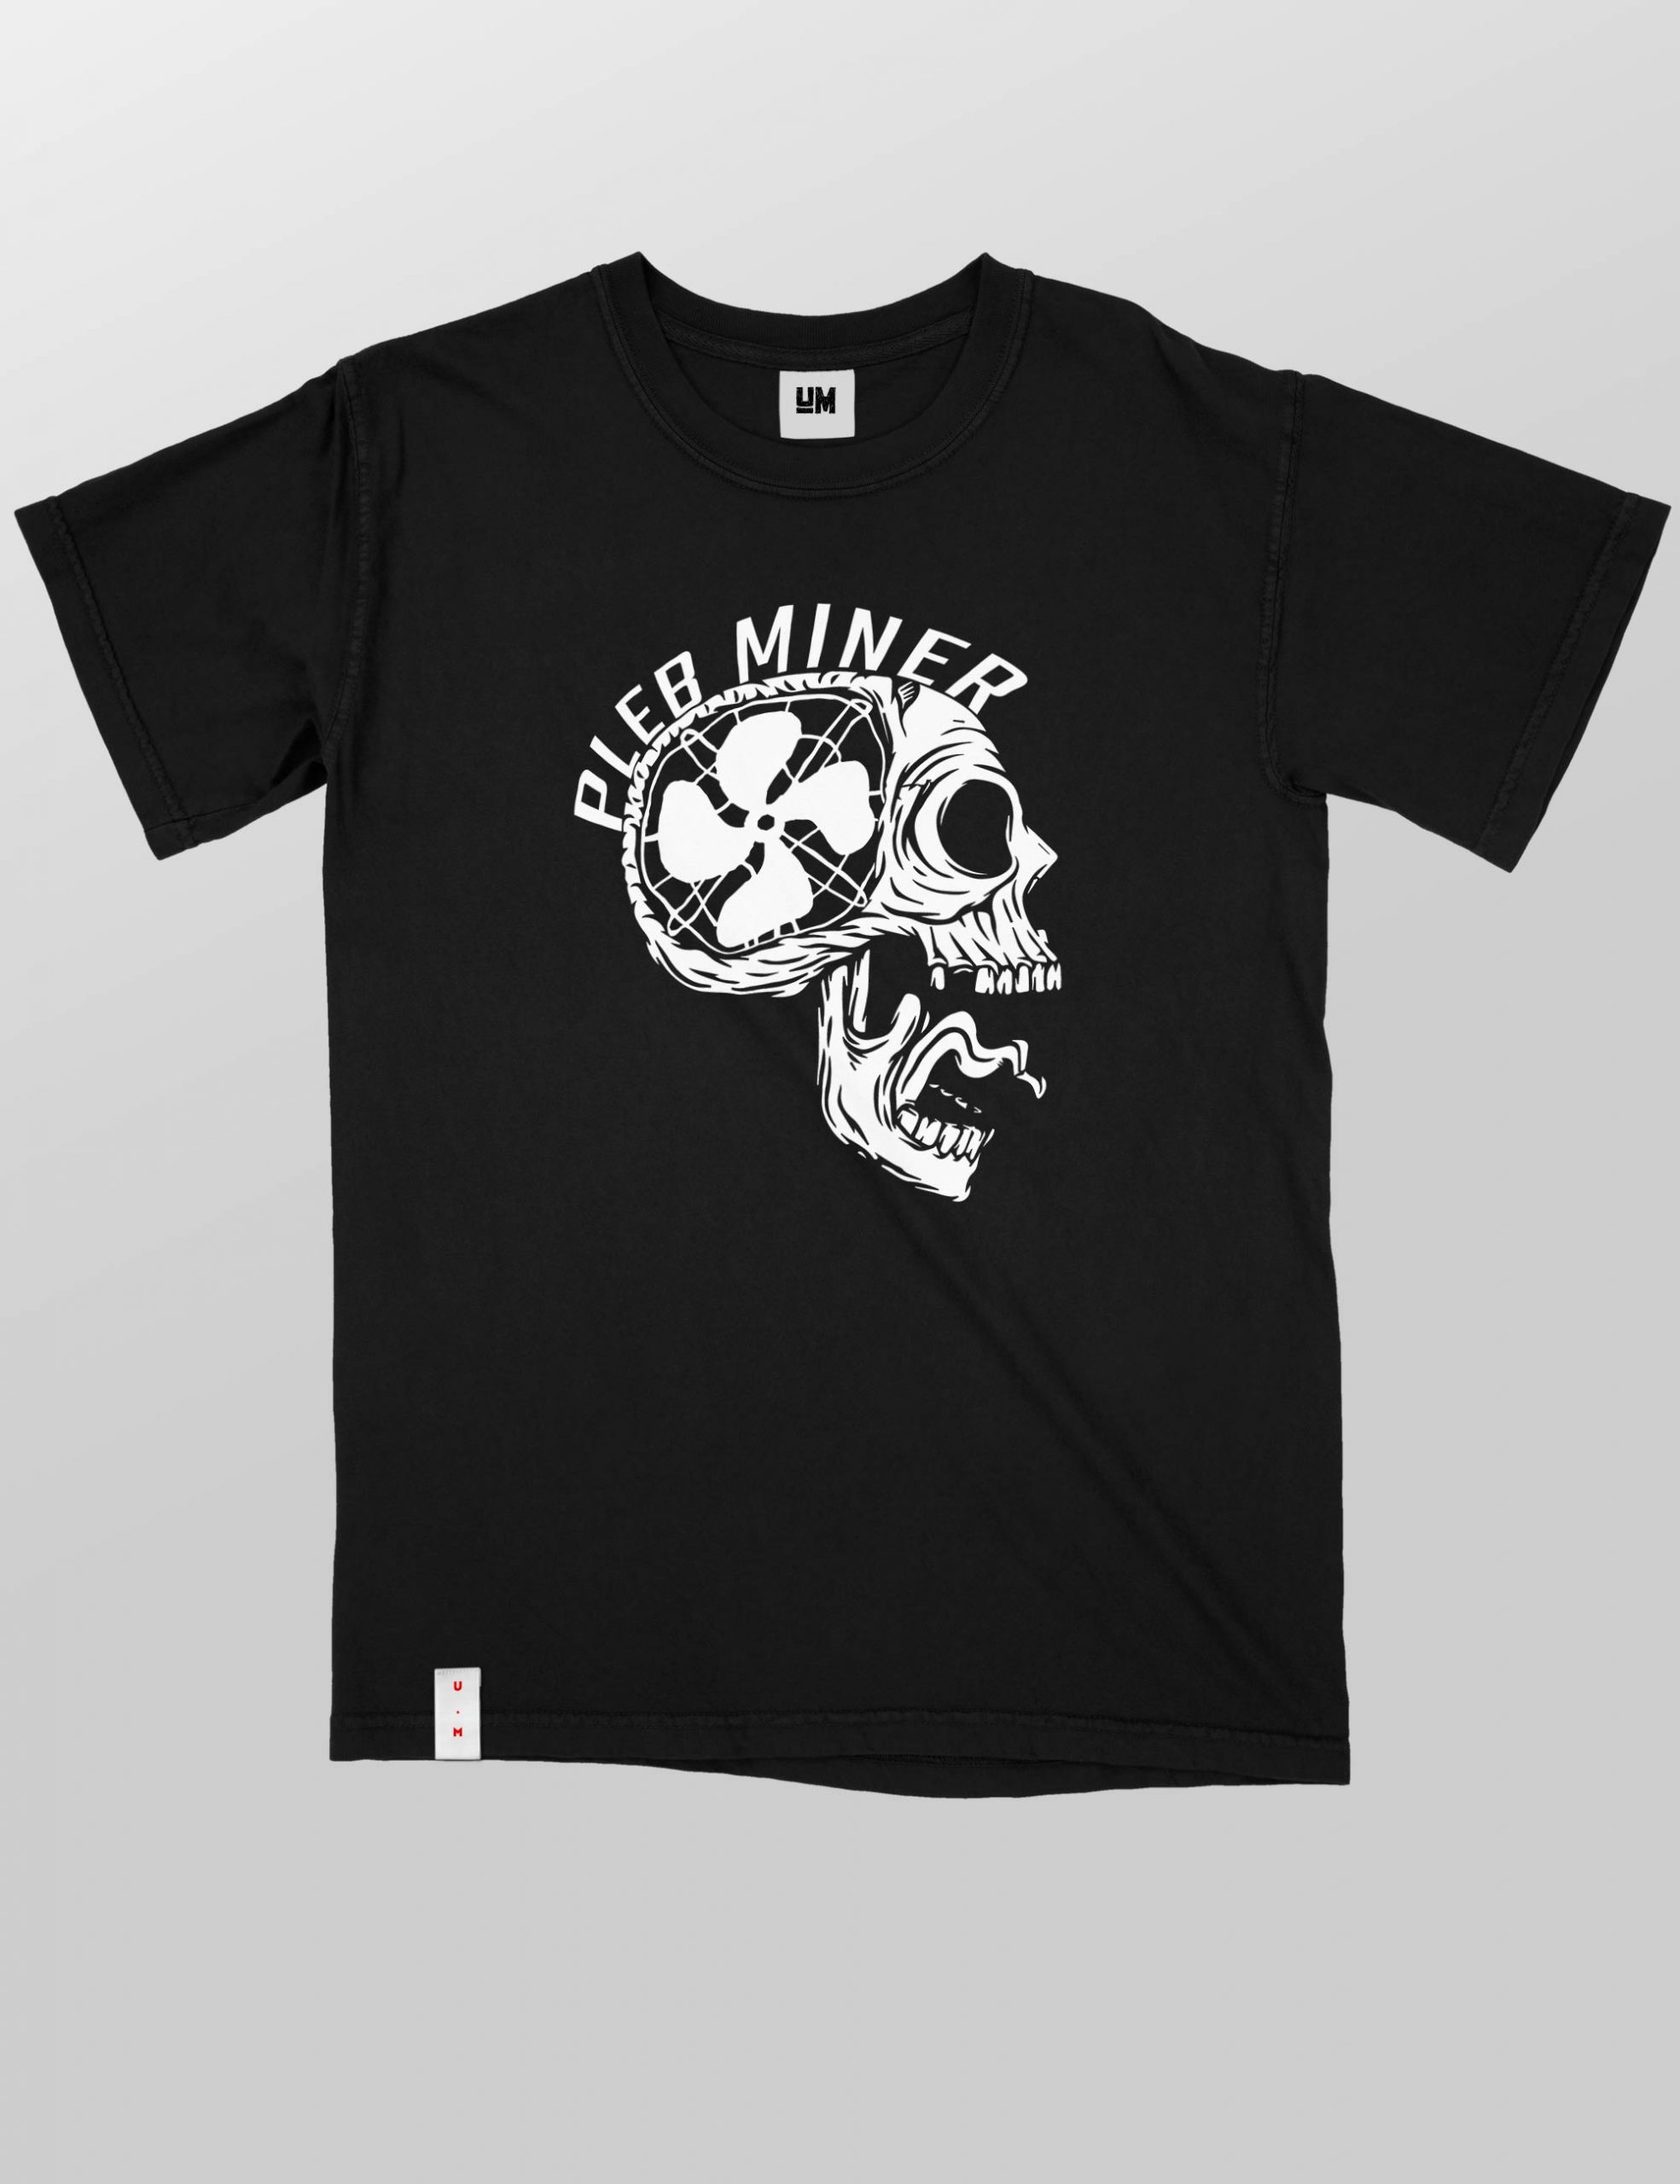 Pleb Miner Skull T-Shirt